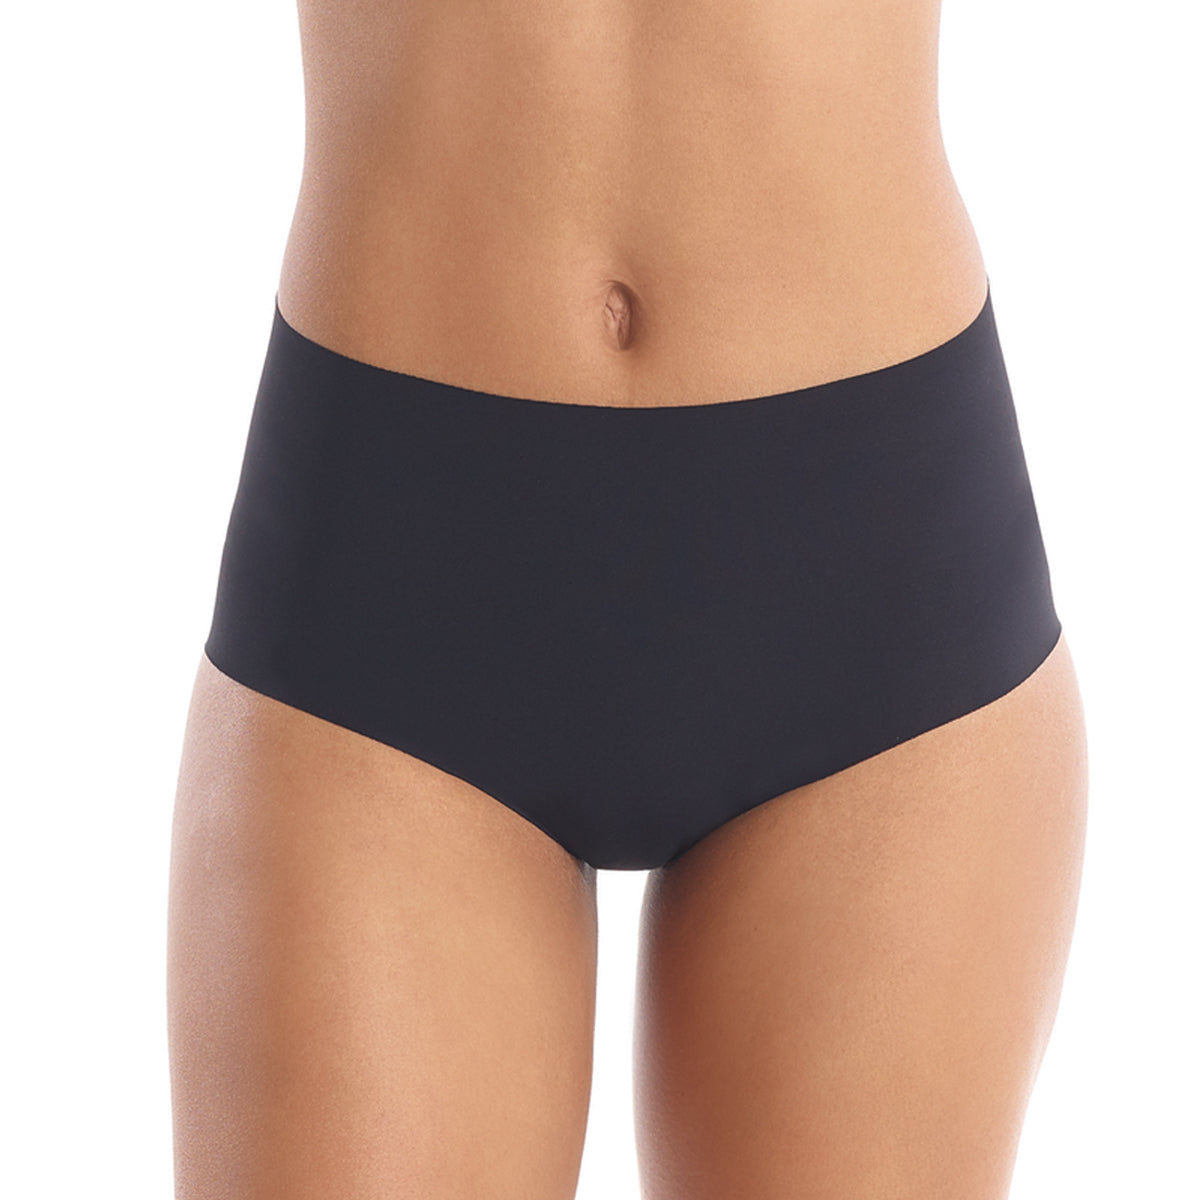 Maison Lejaby Nufit Bikini Panty in Black FINAL SALE (40% Off) - Busted Bra  Shop